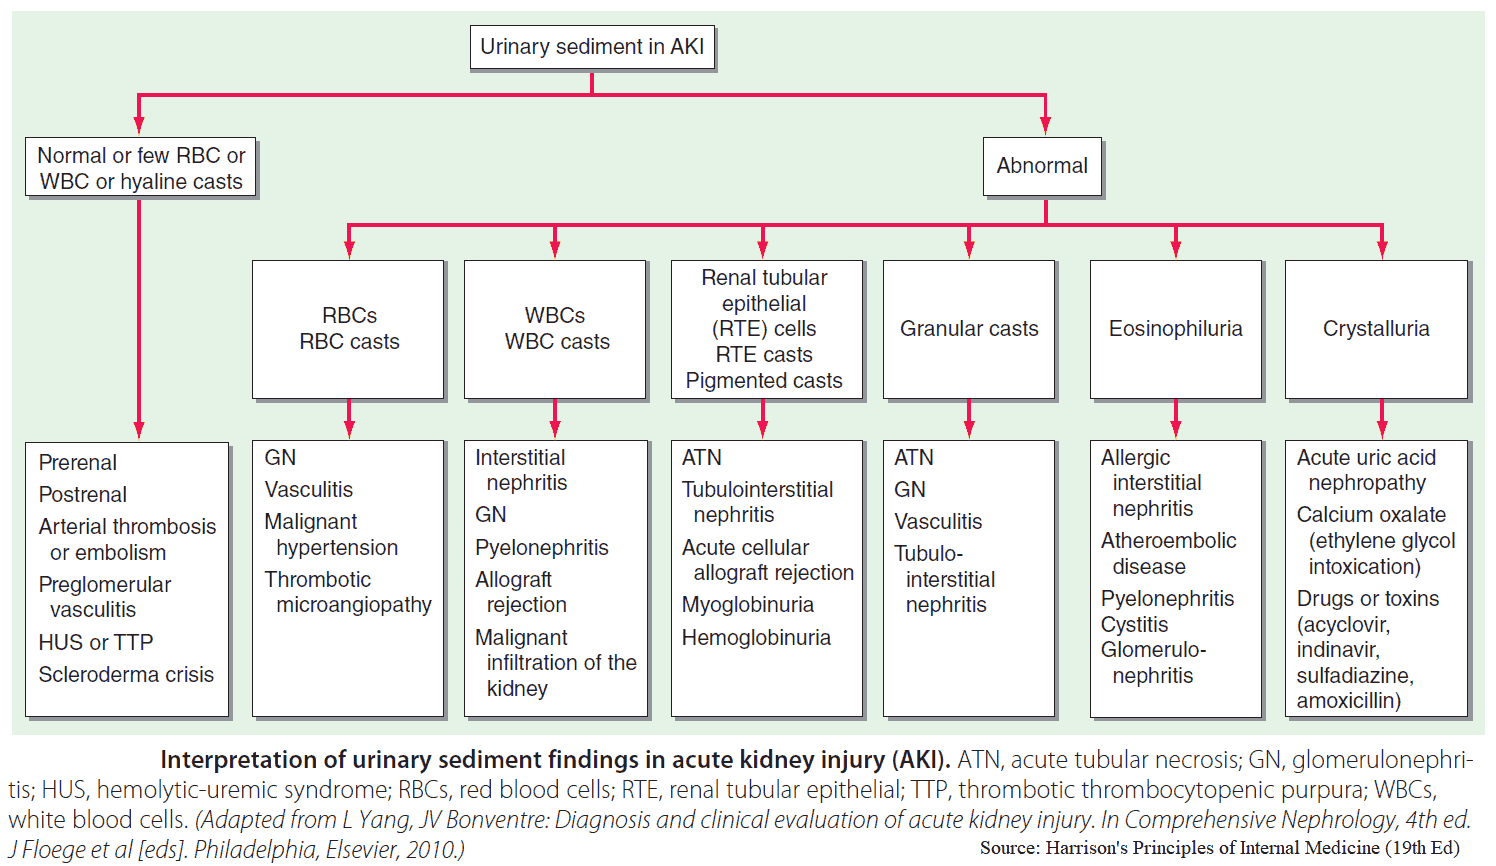 Interpretation of urinary sediment findings in acute kidney injury (AKI)